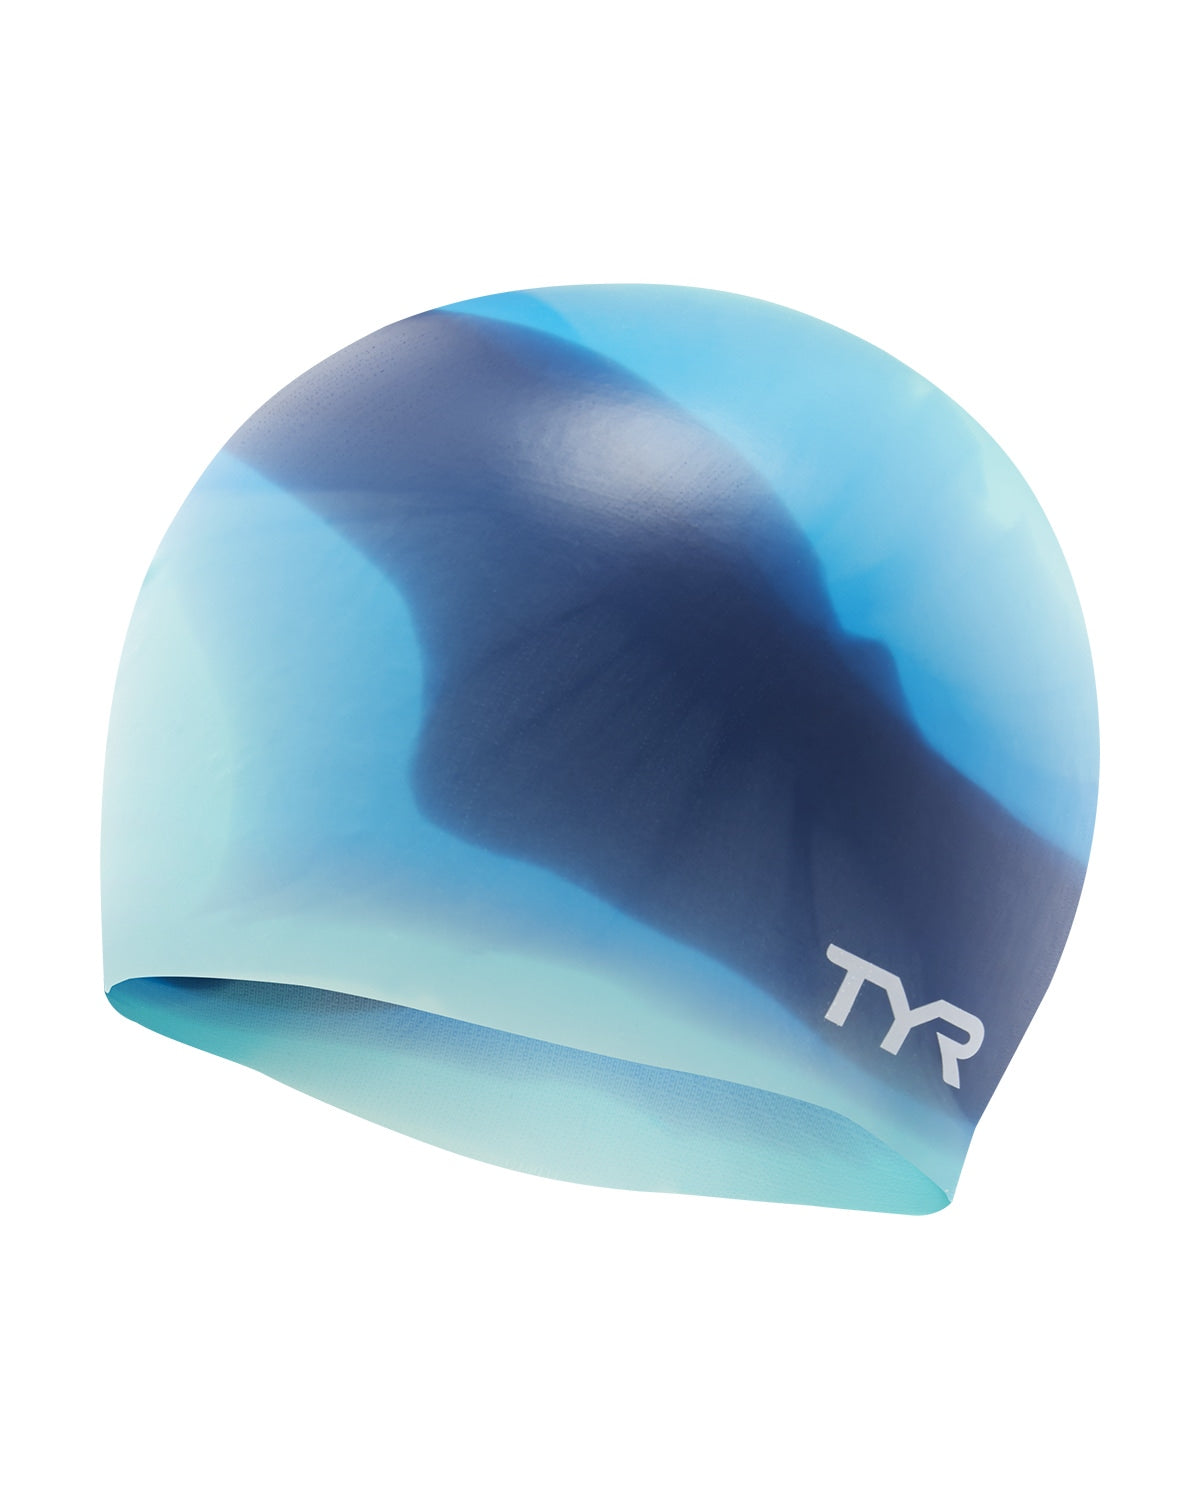 TYR Blue/Teal Multi Color Silicone Swim Cap